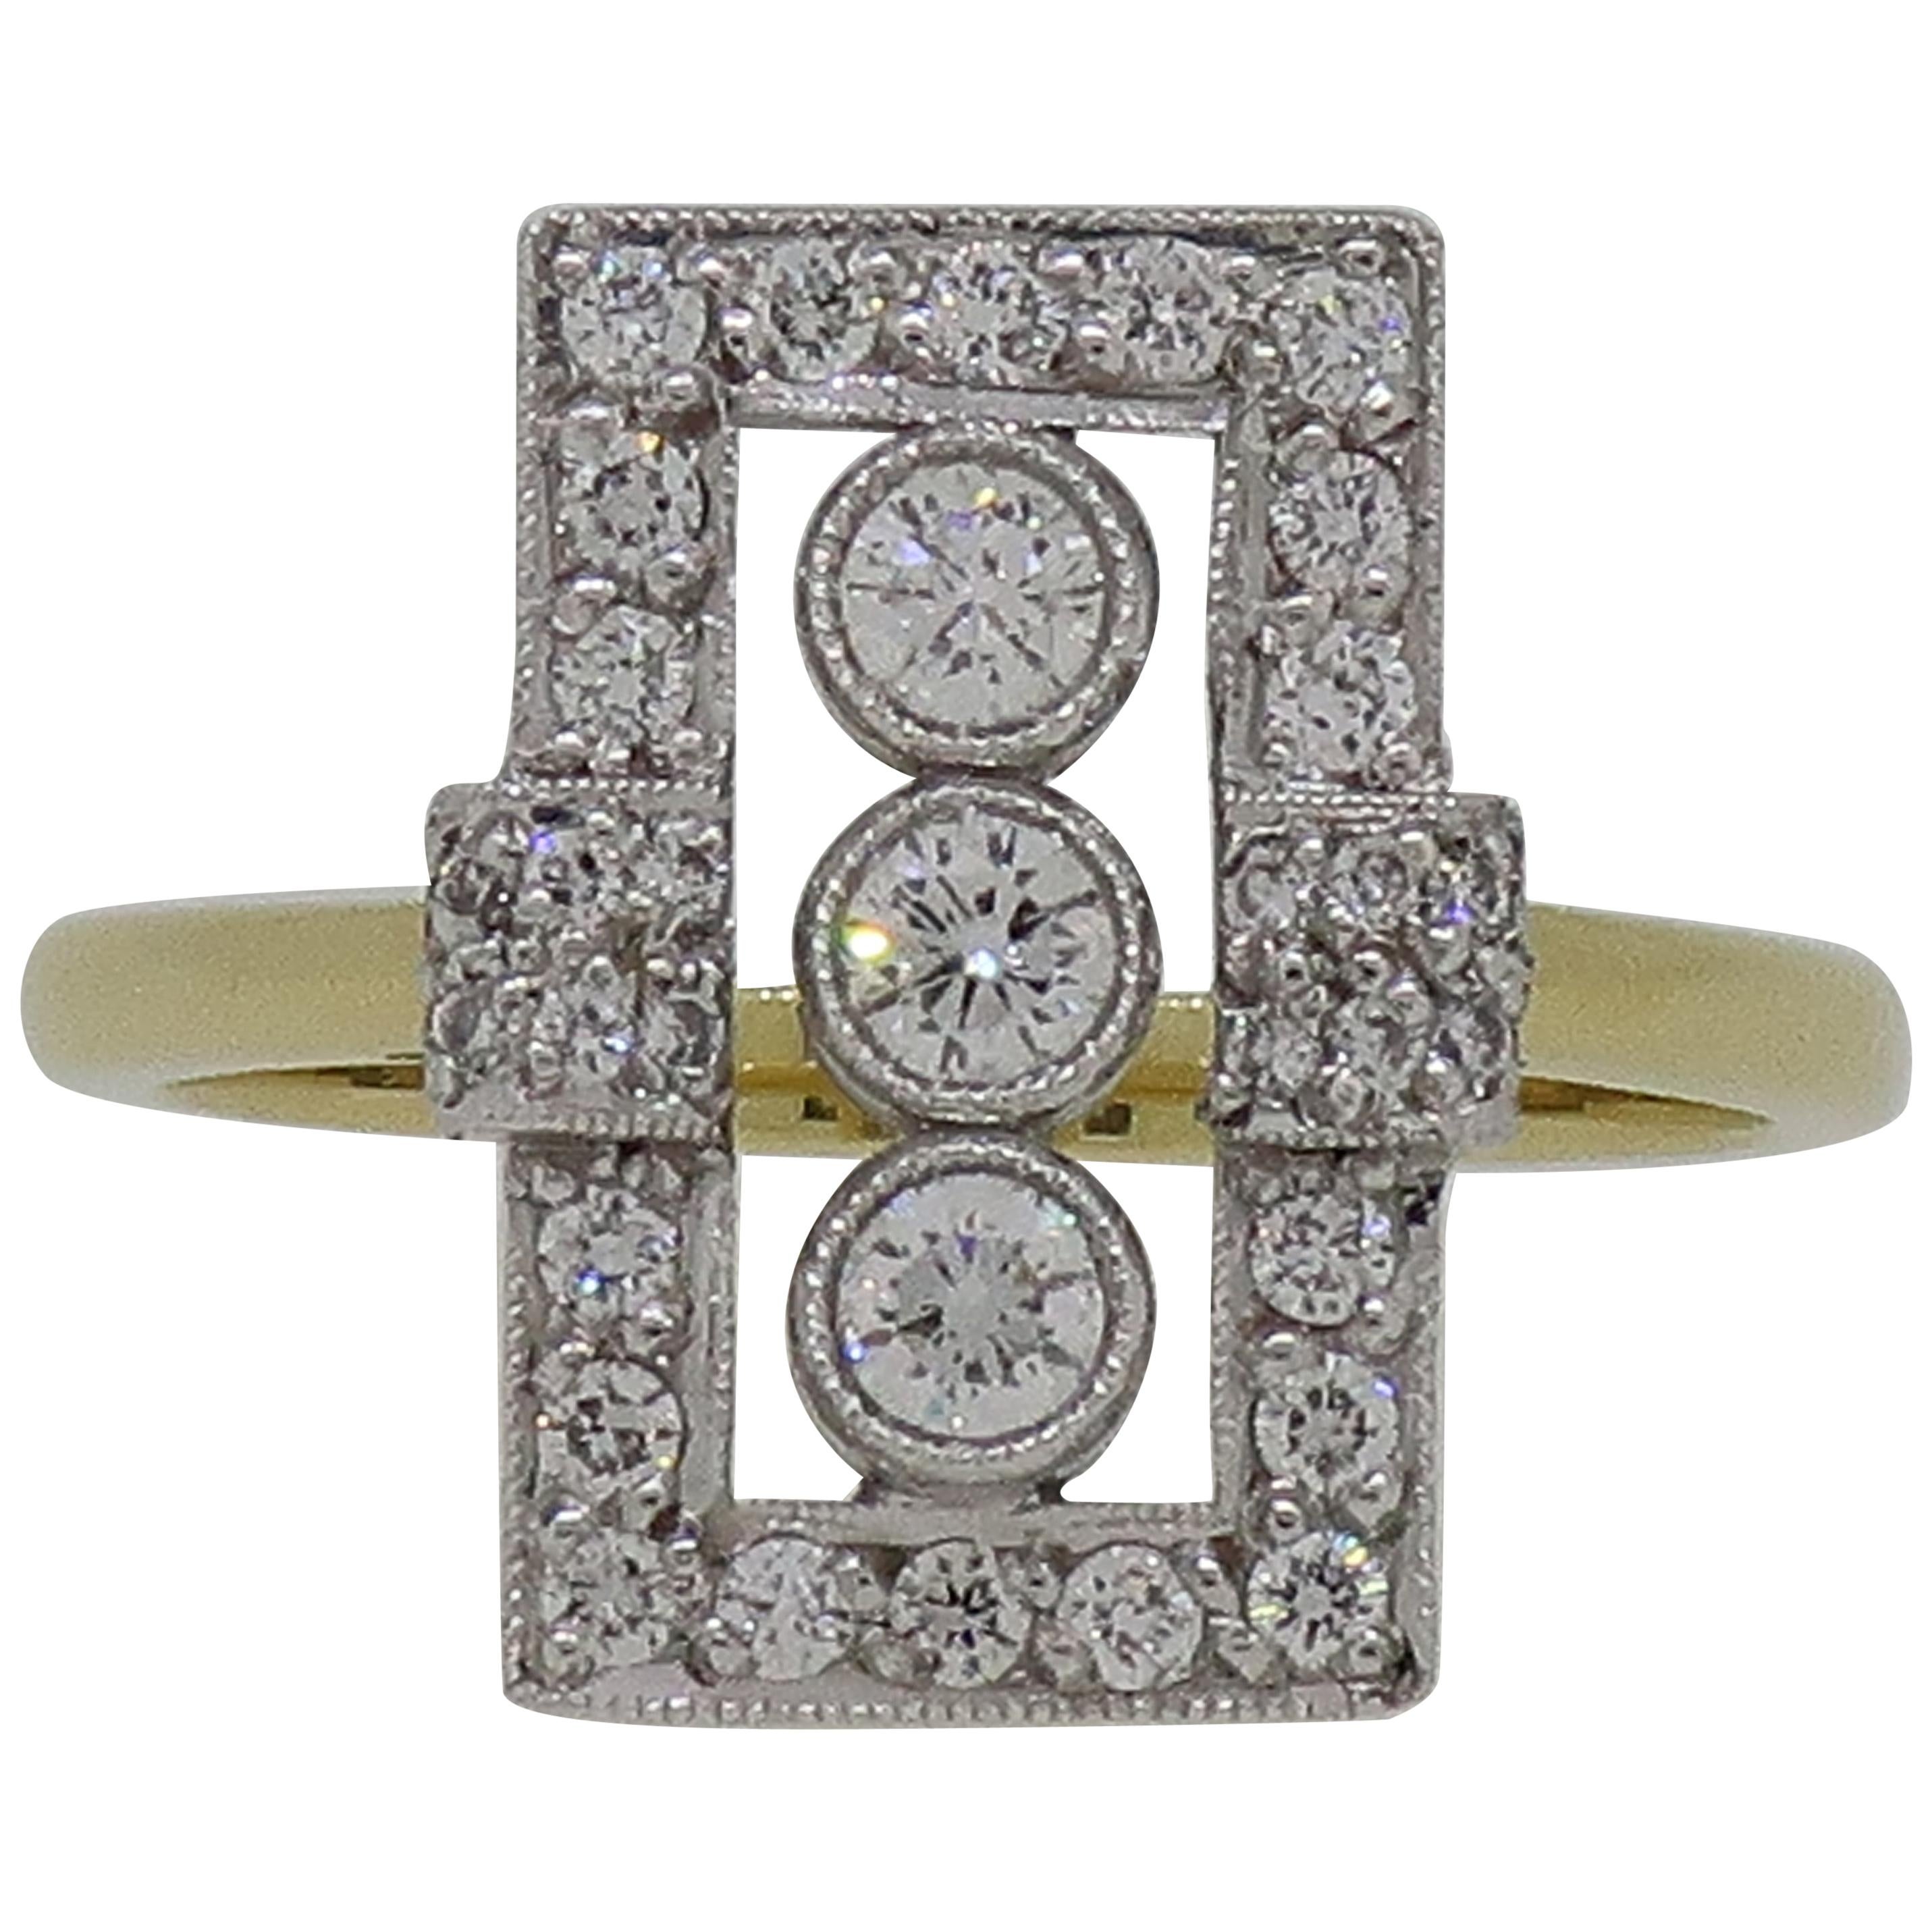 Diamond Art Deco Style Cluster Ring 18 Karat Yellow and White Gold